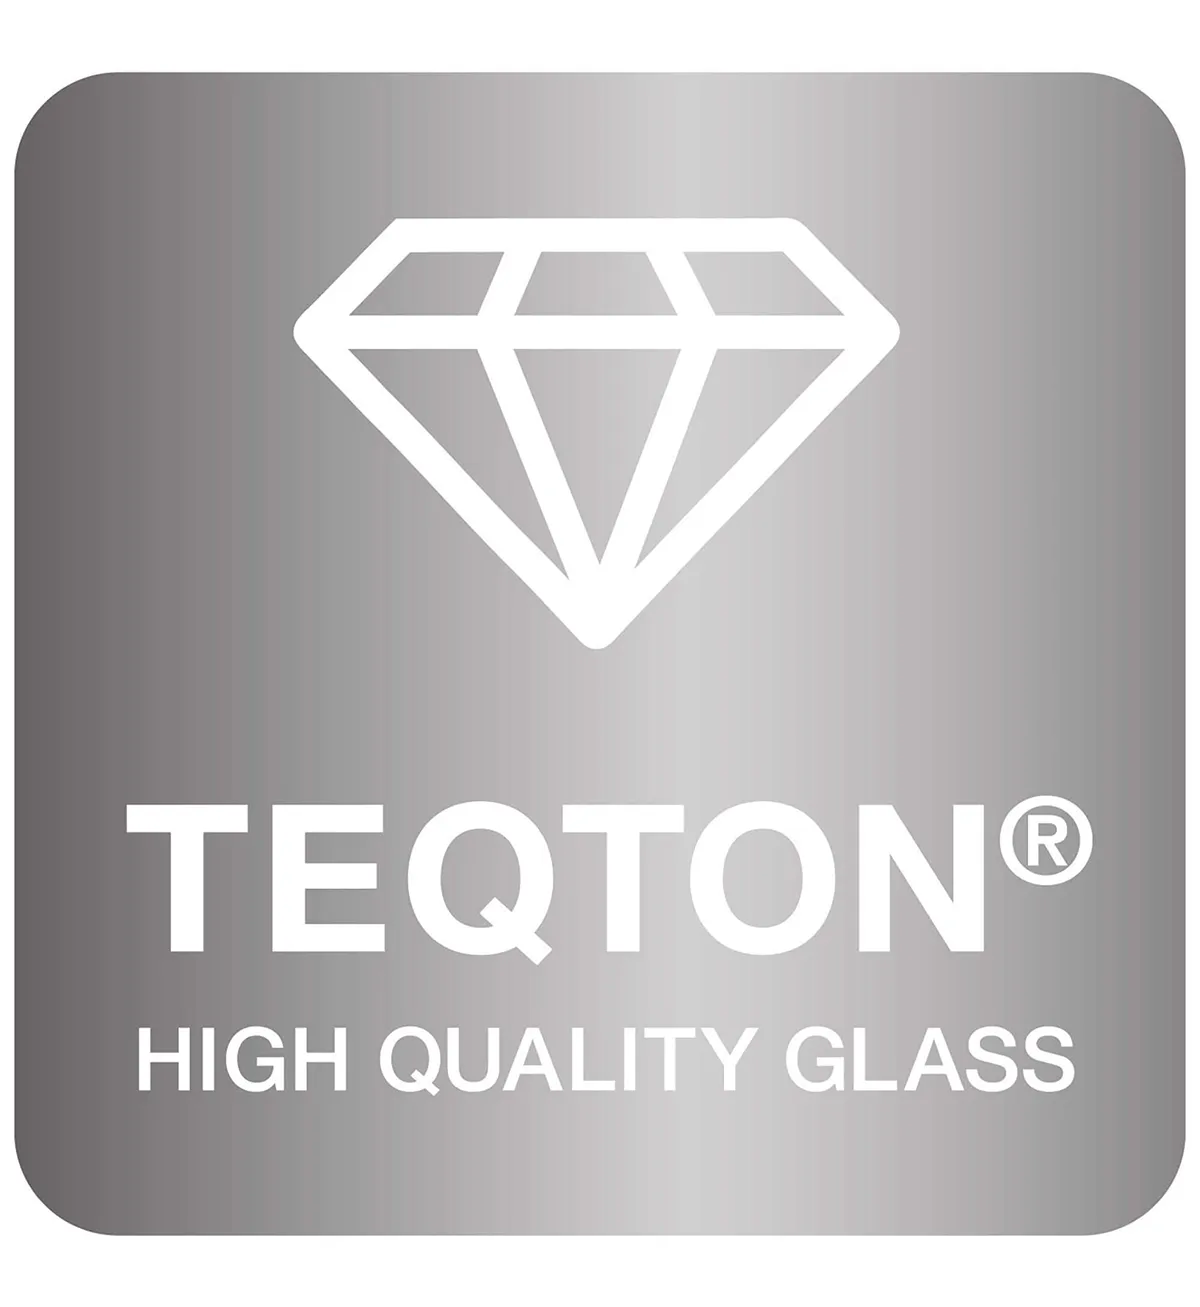 TEQTON  - High Quality Glass by LEONARDO